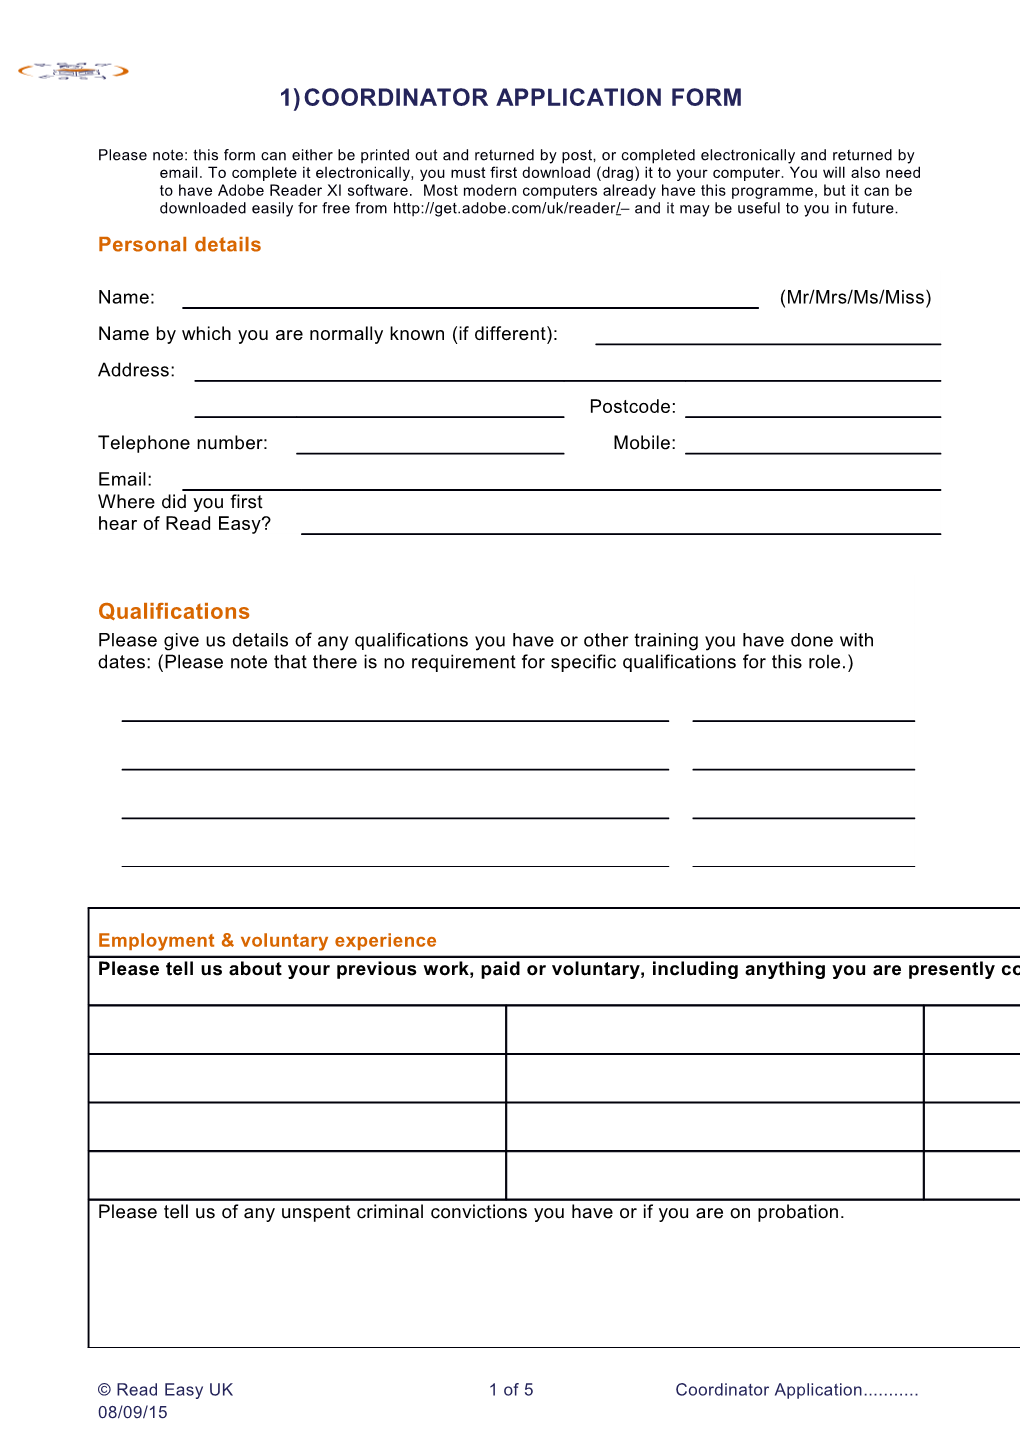 Coordinator Application Form